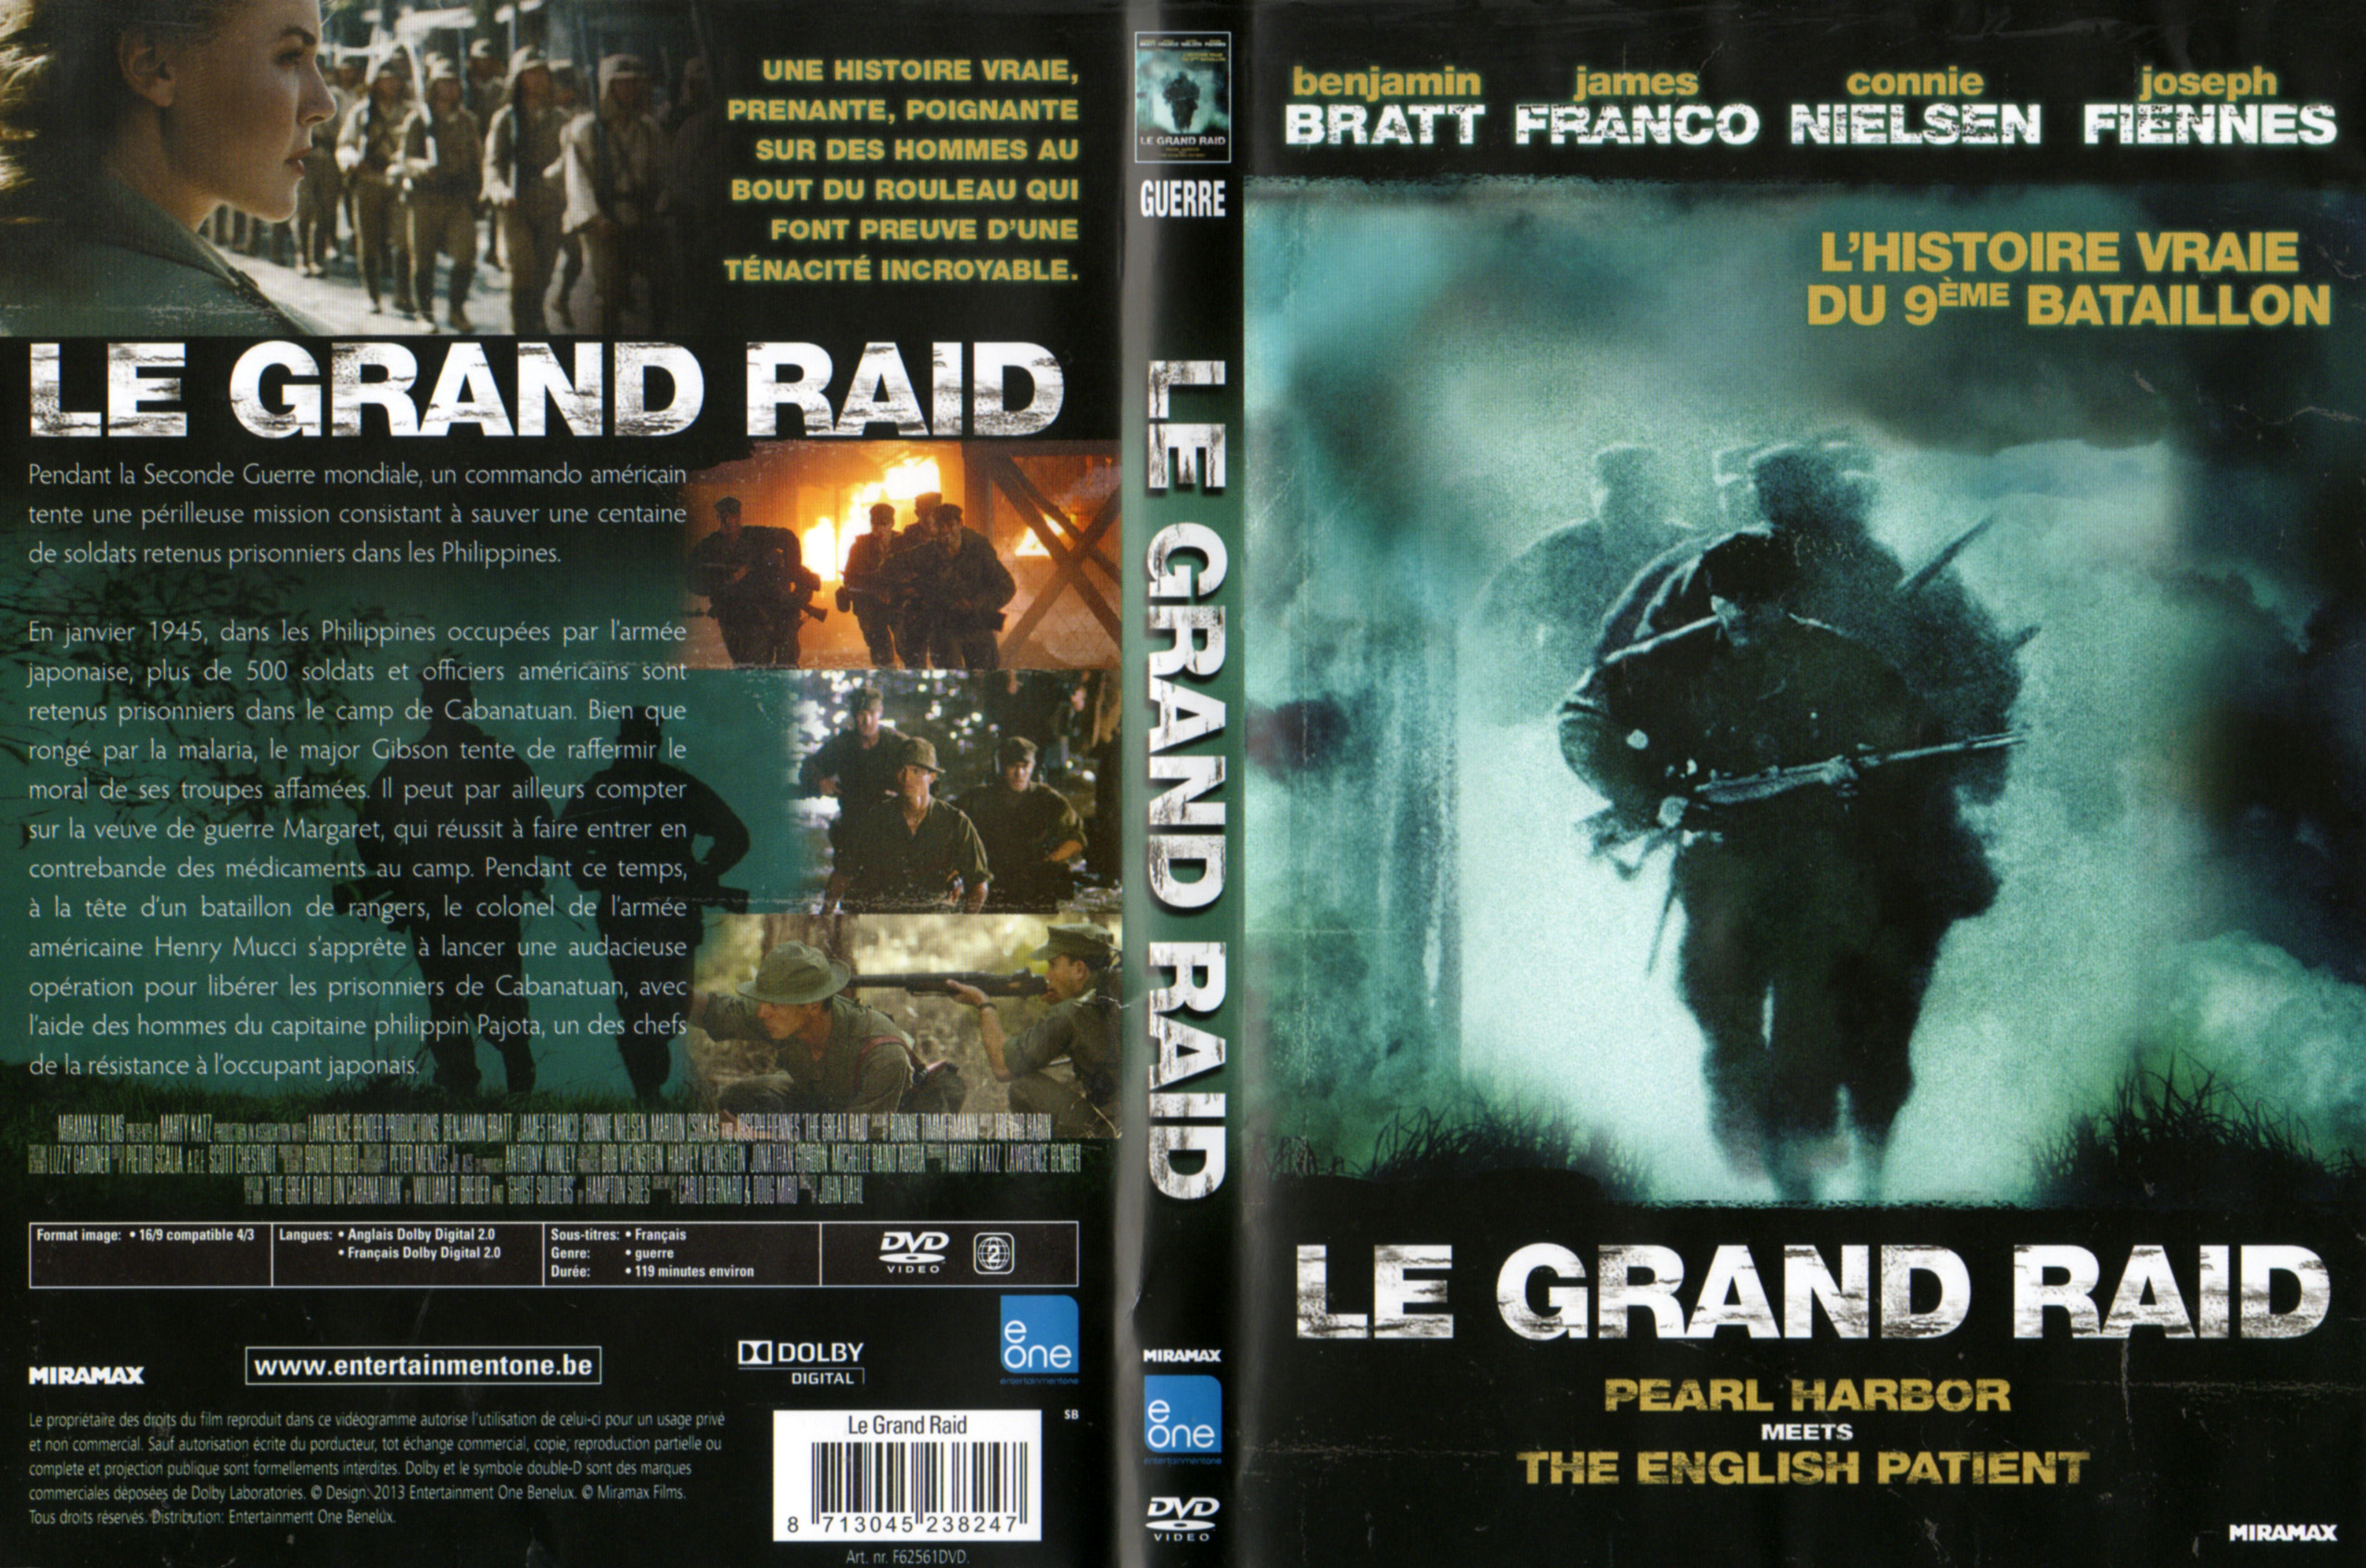 Jaquette DVD Le grand raid v2